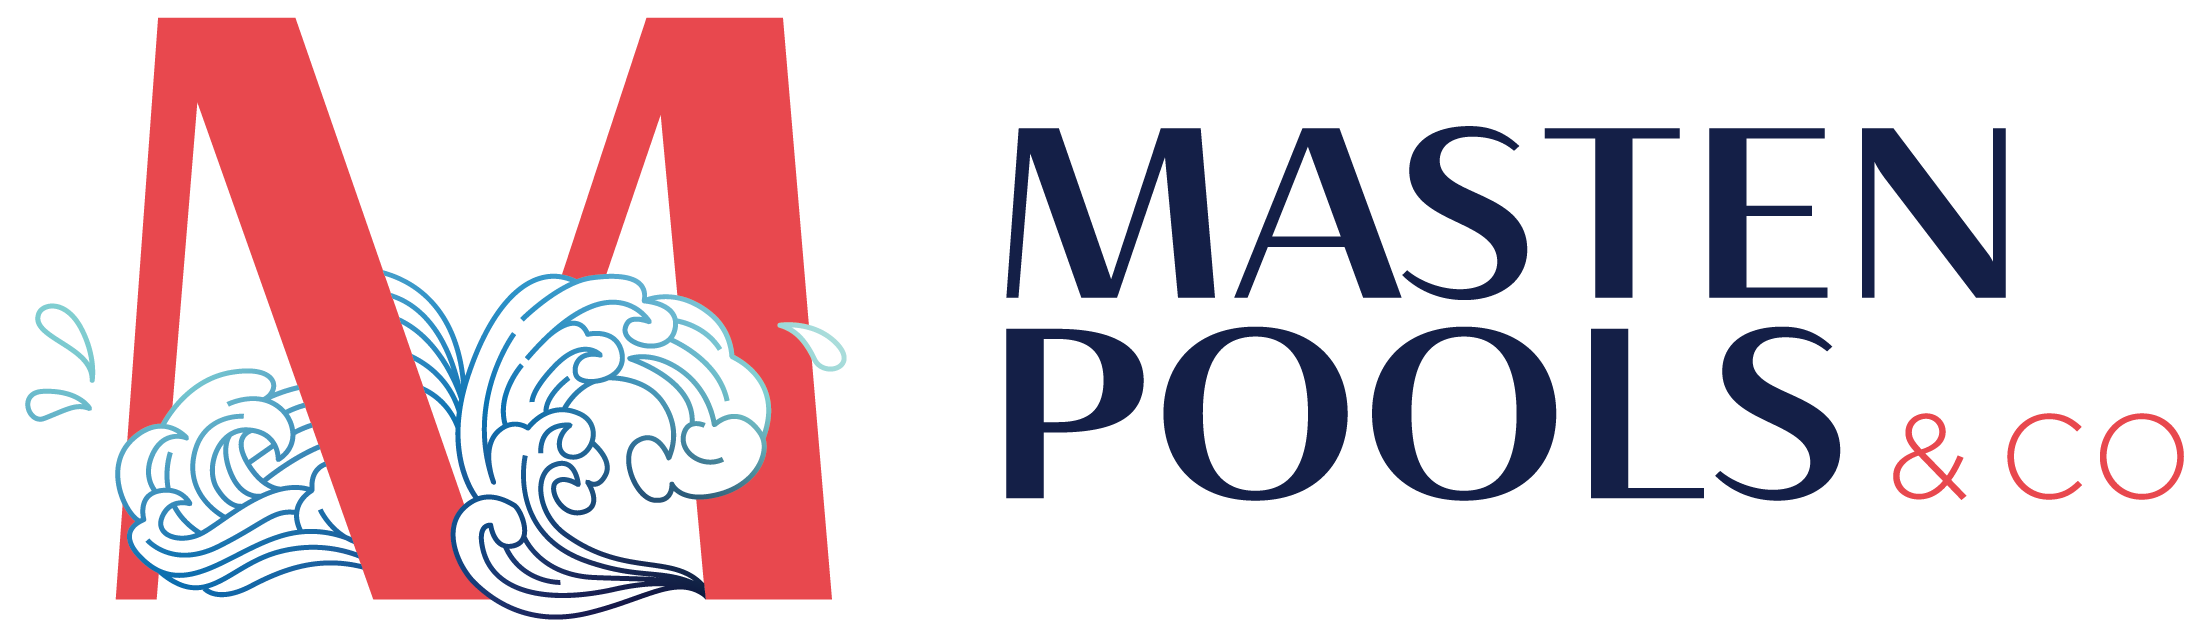 Masten Pools logo